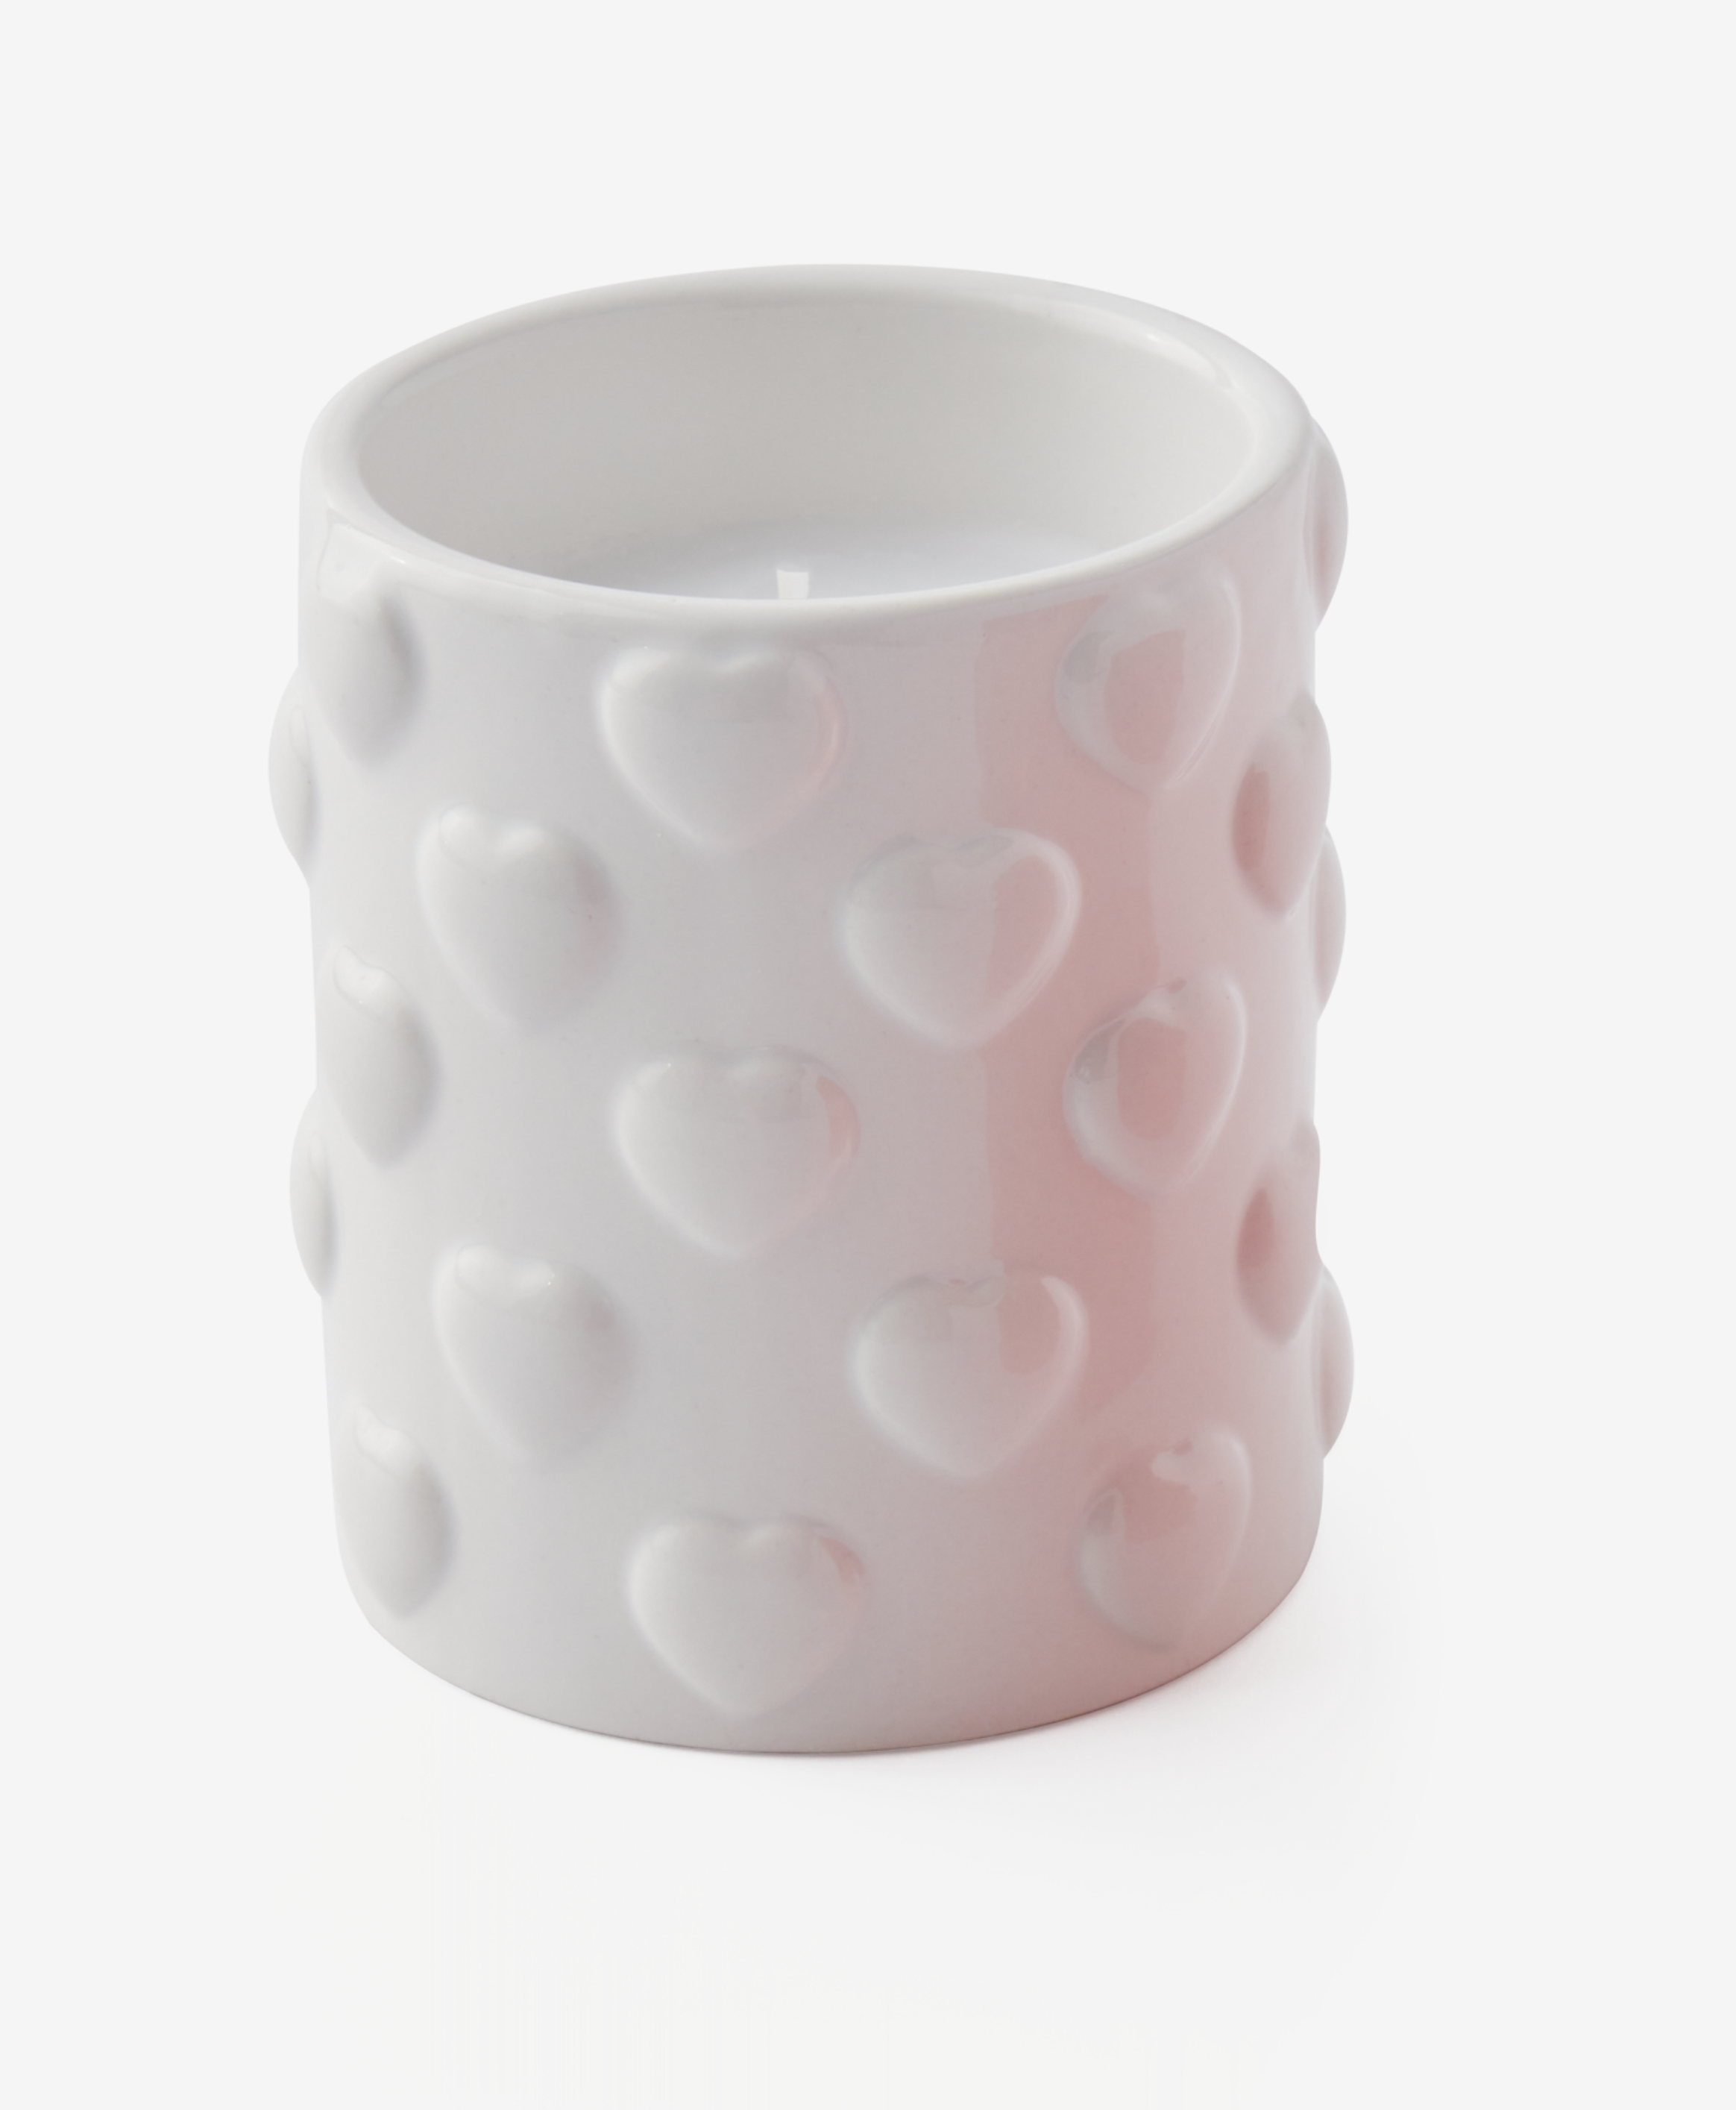 Kerze aus Keramik, weiß, ø 8,5 cm, Höhe: 10 cm